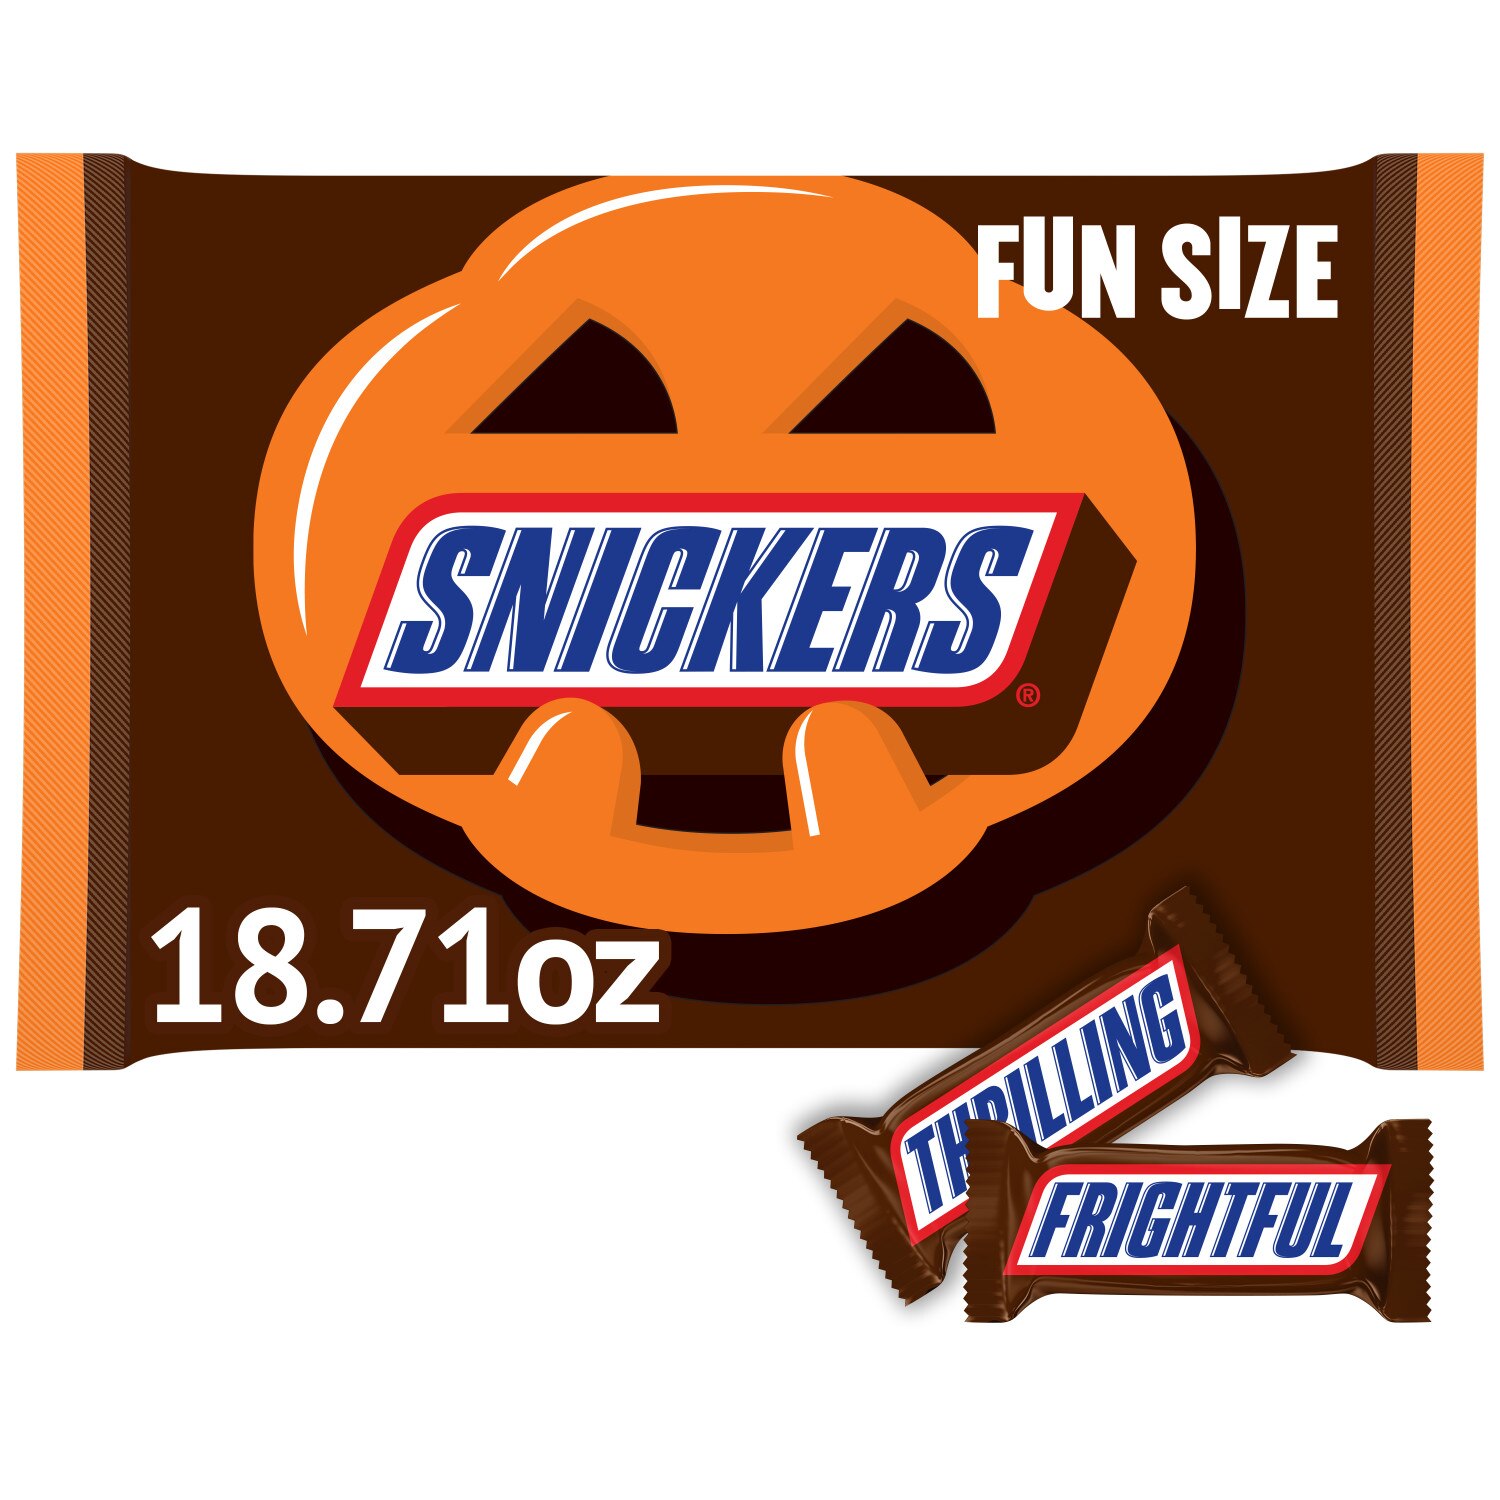 Customer Reviews: Snickers Spooky Chocolate Bars Fun Size Halloween Candy,  18.71 oz - CVS Pharmacy